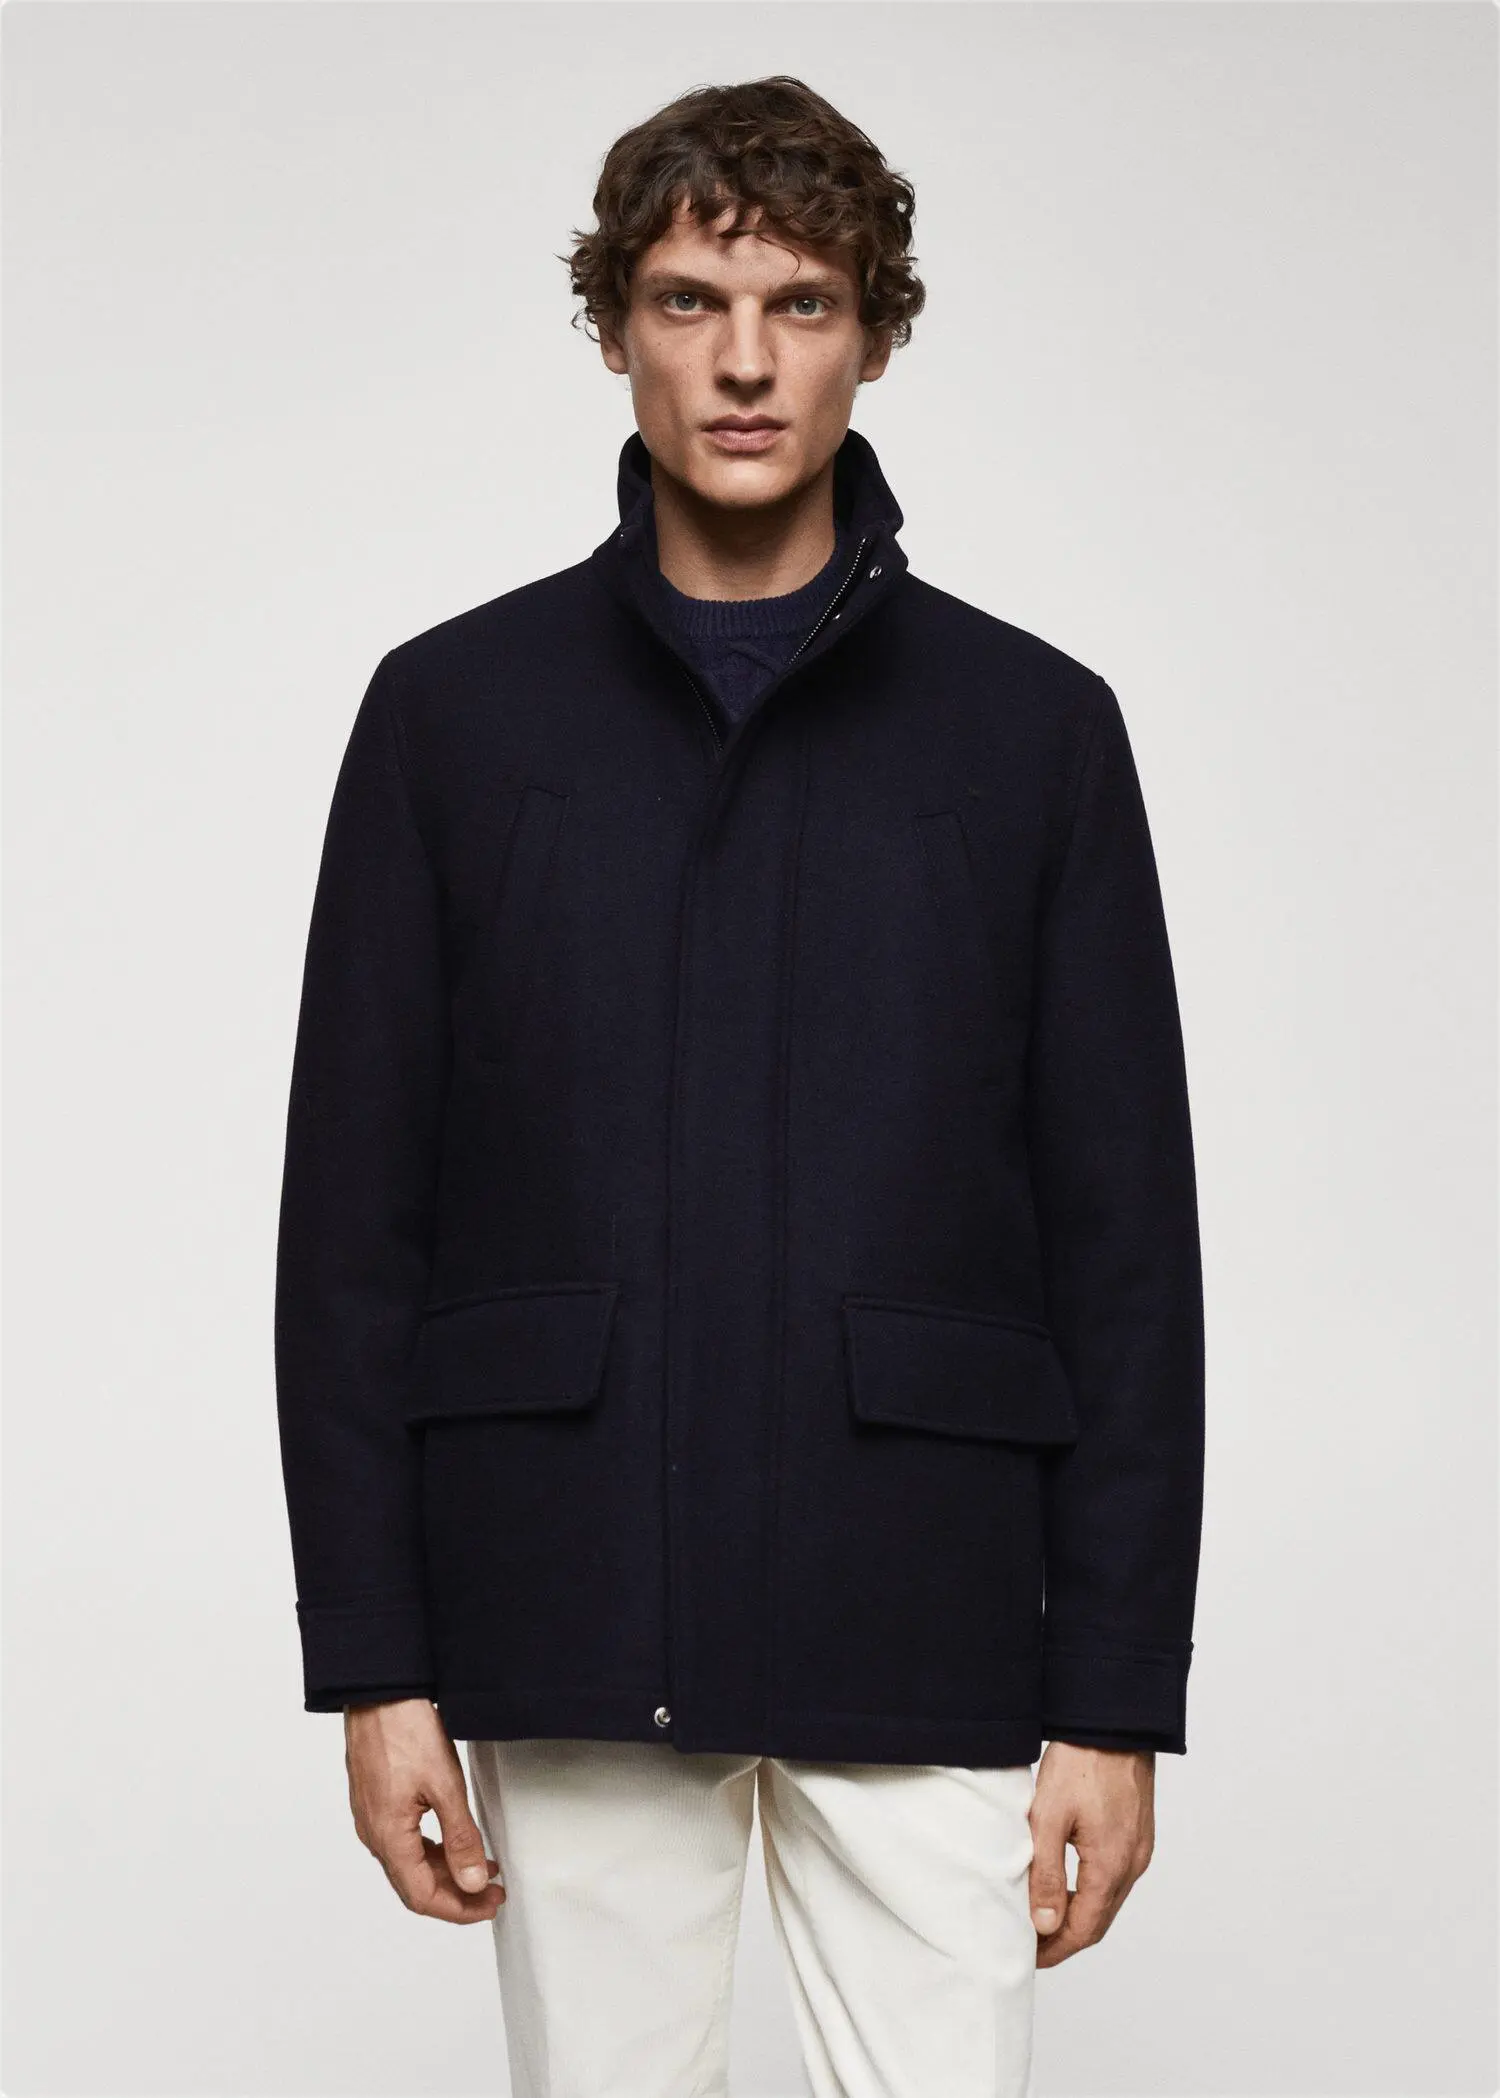 Mango Short wool coat with pockets. 1